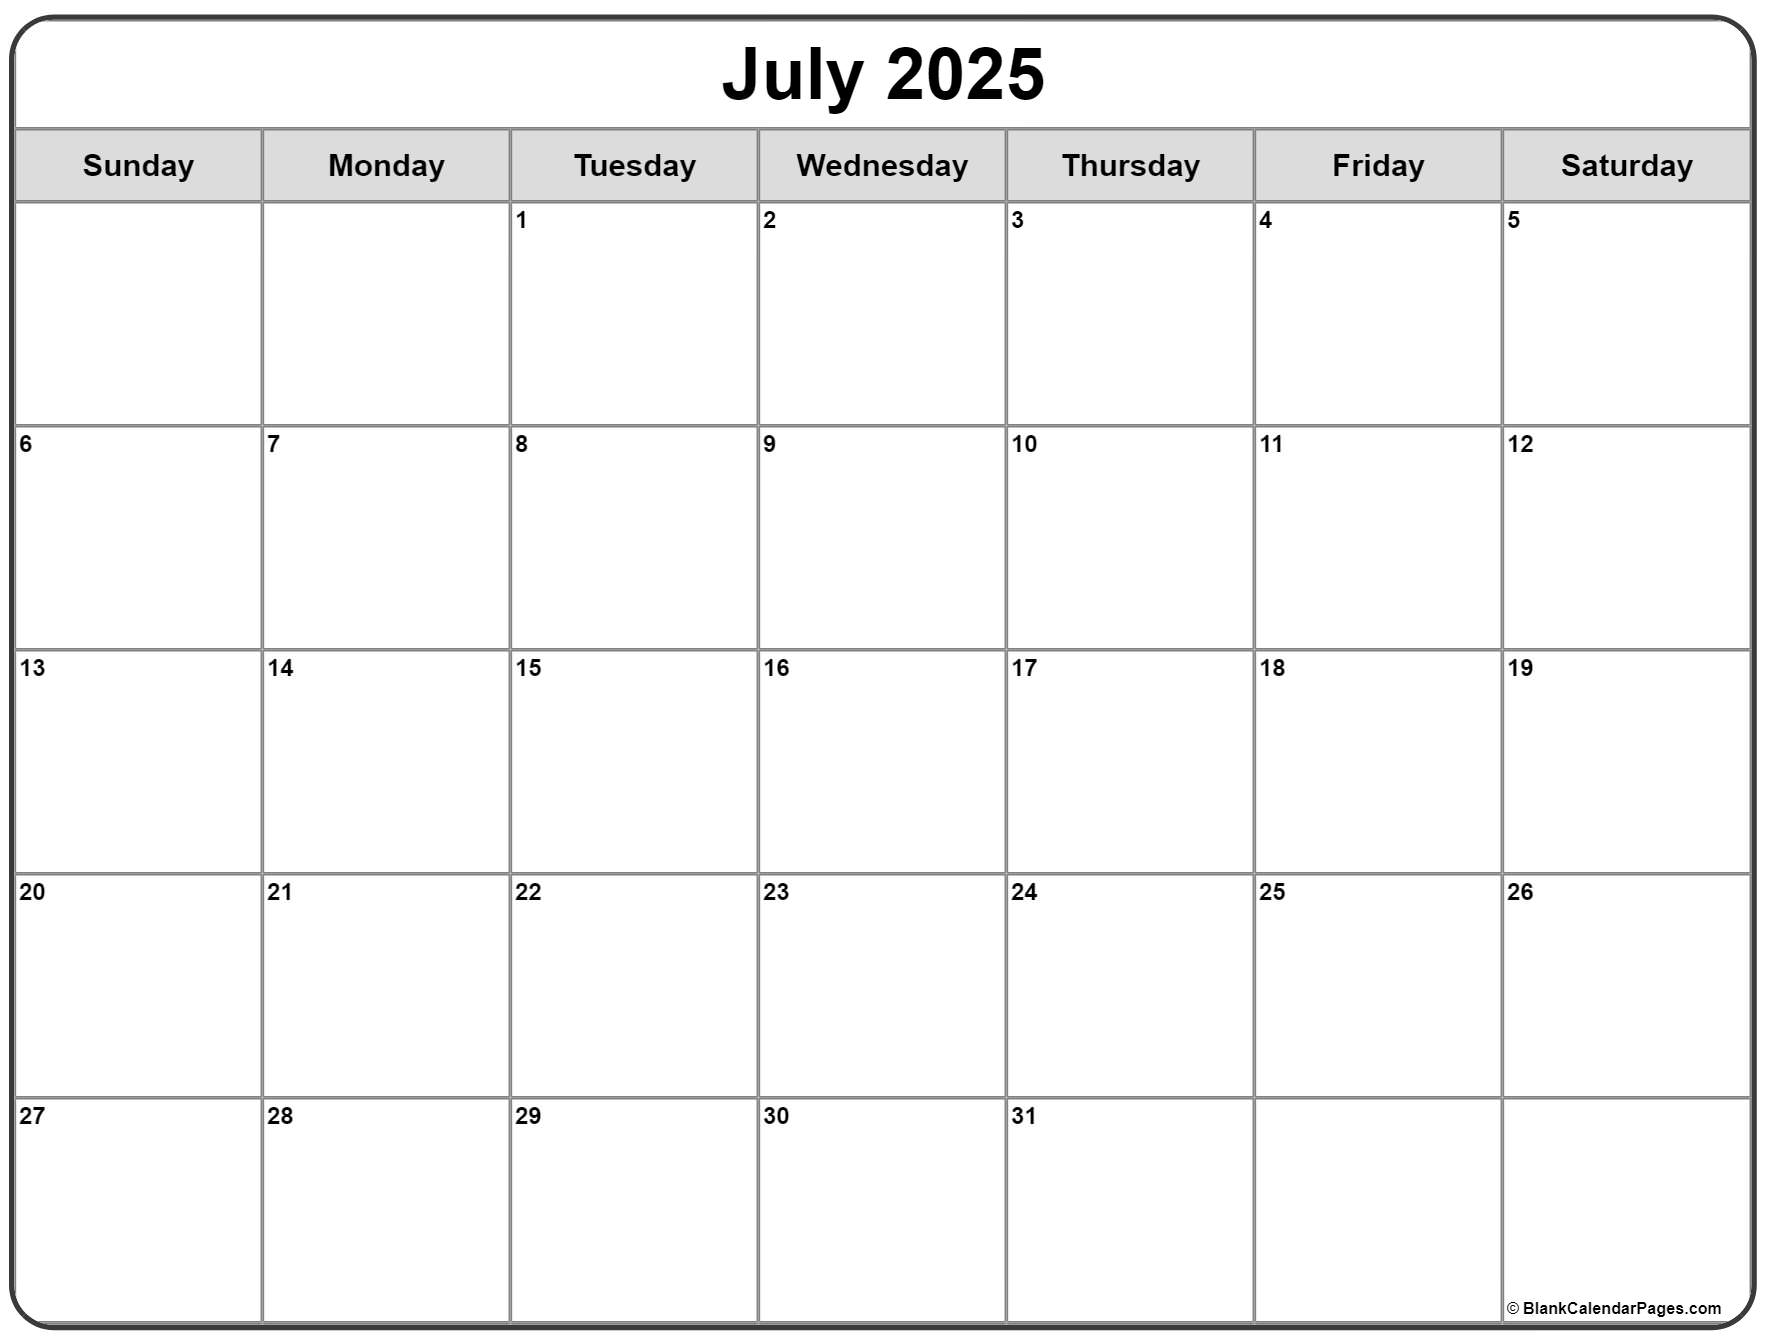 fillable-july-2025-calendar